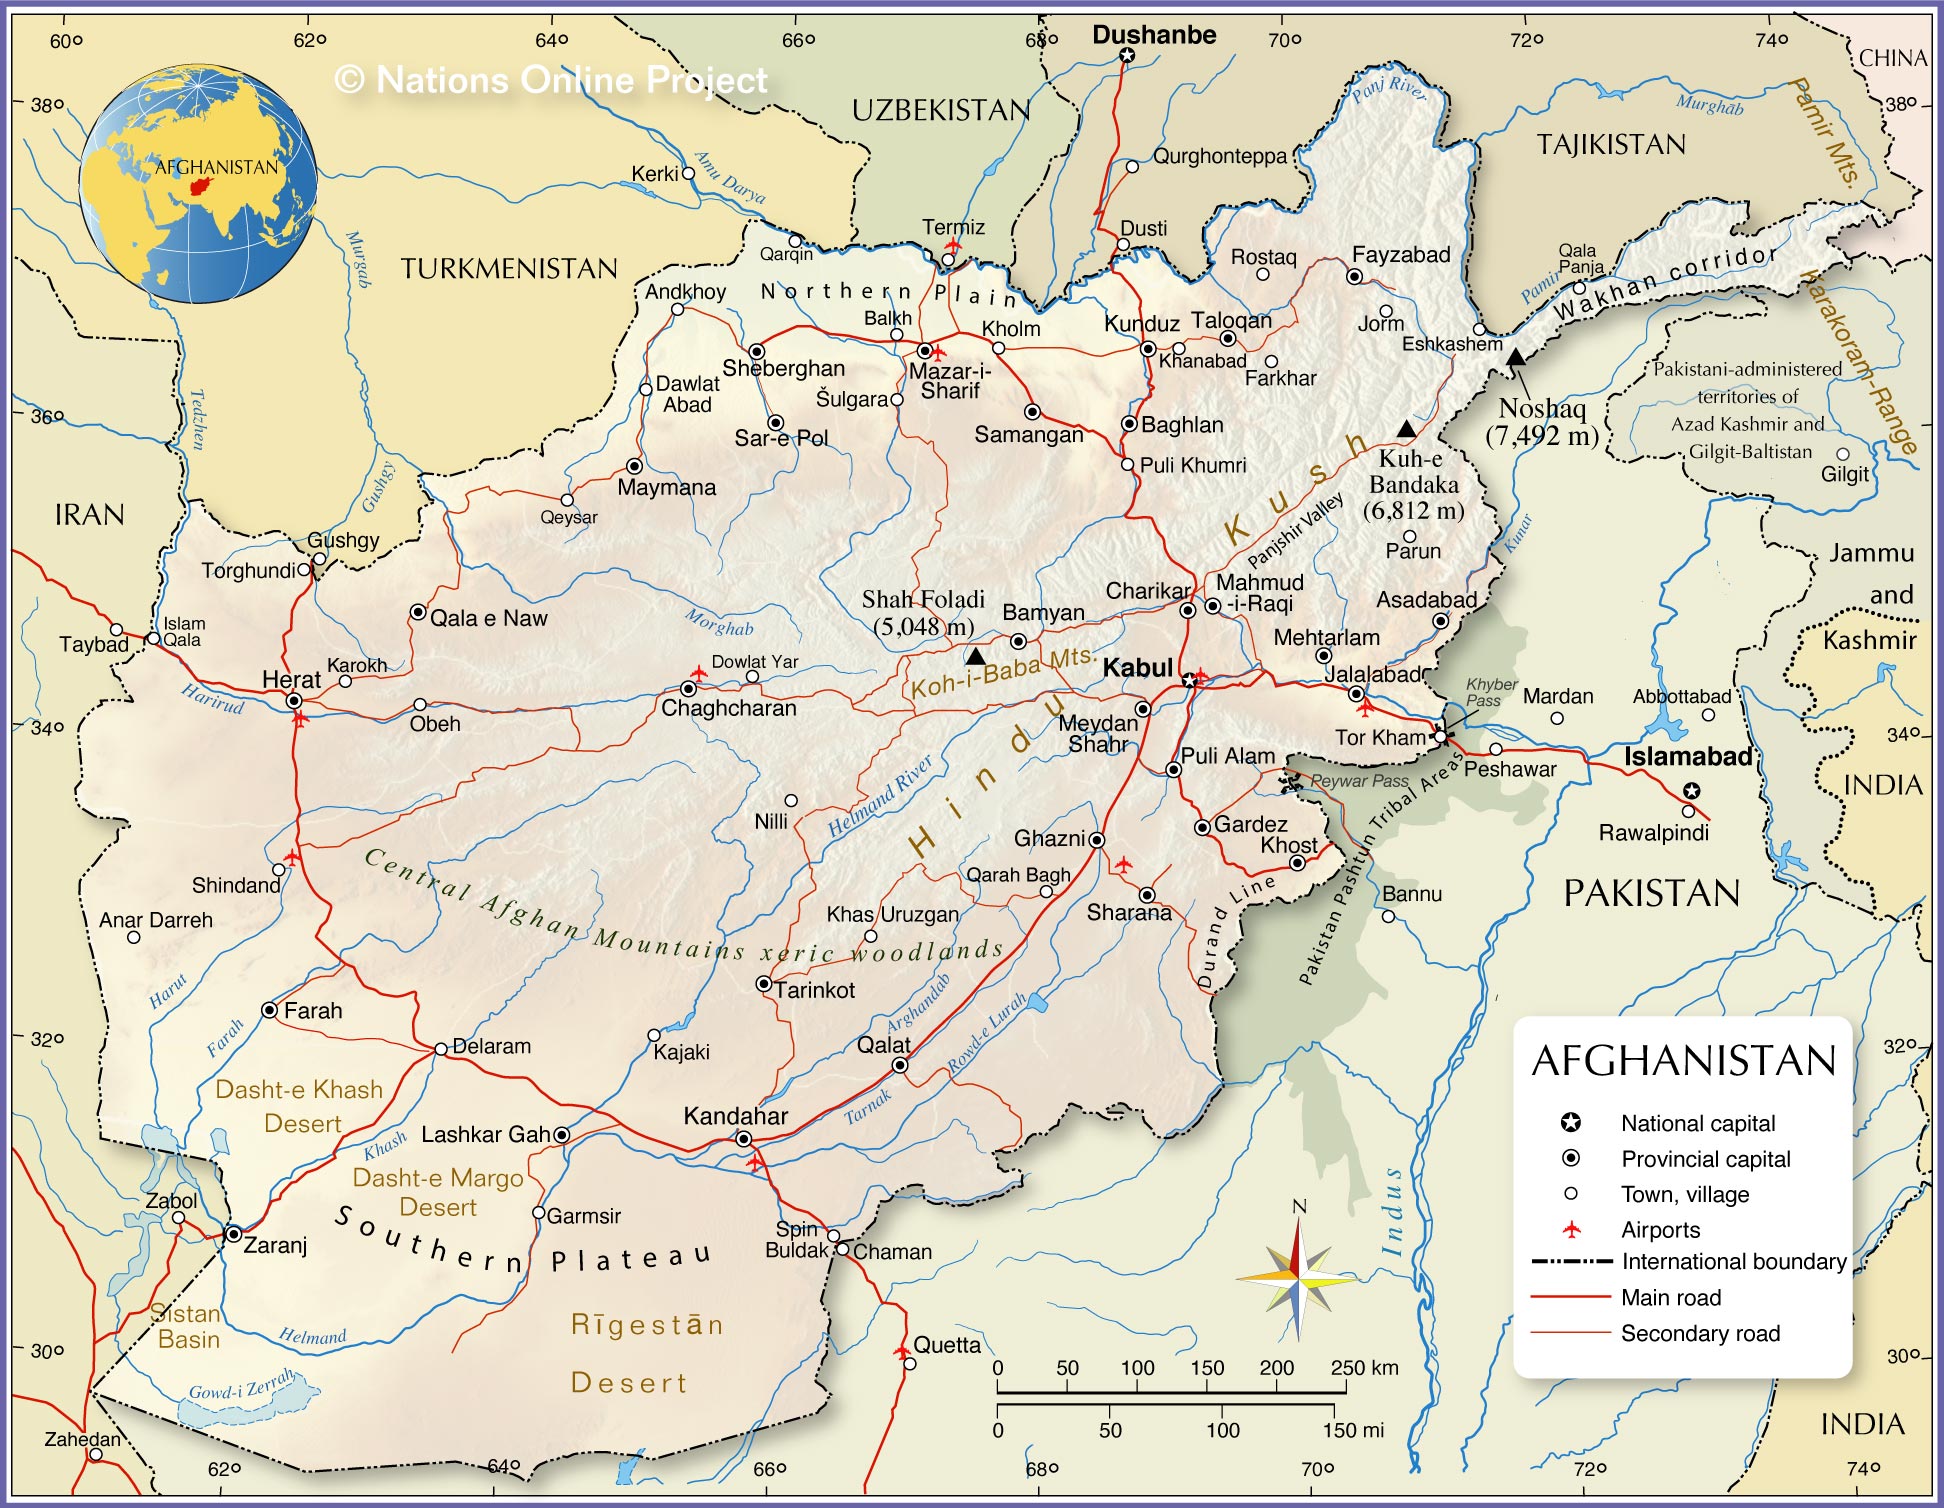 Afghanistan Borders Ethnicity Taliban Culture